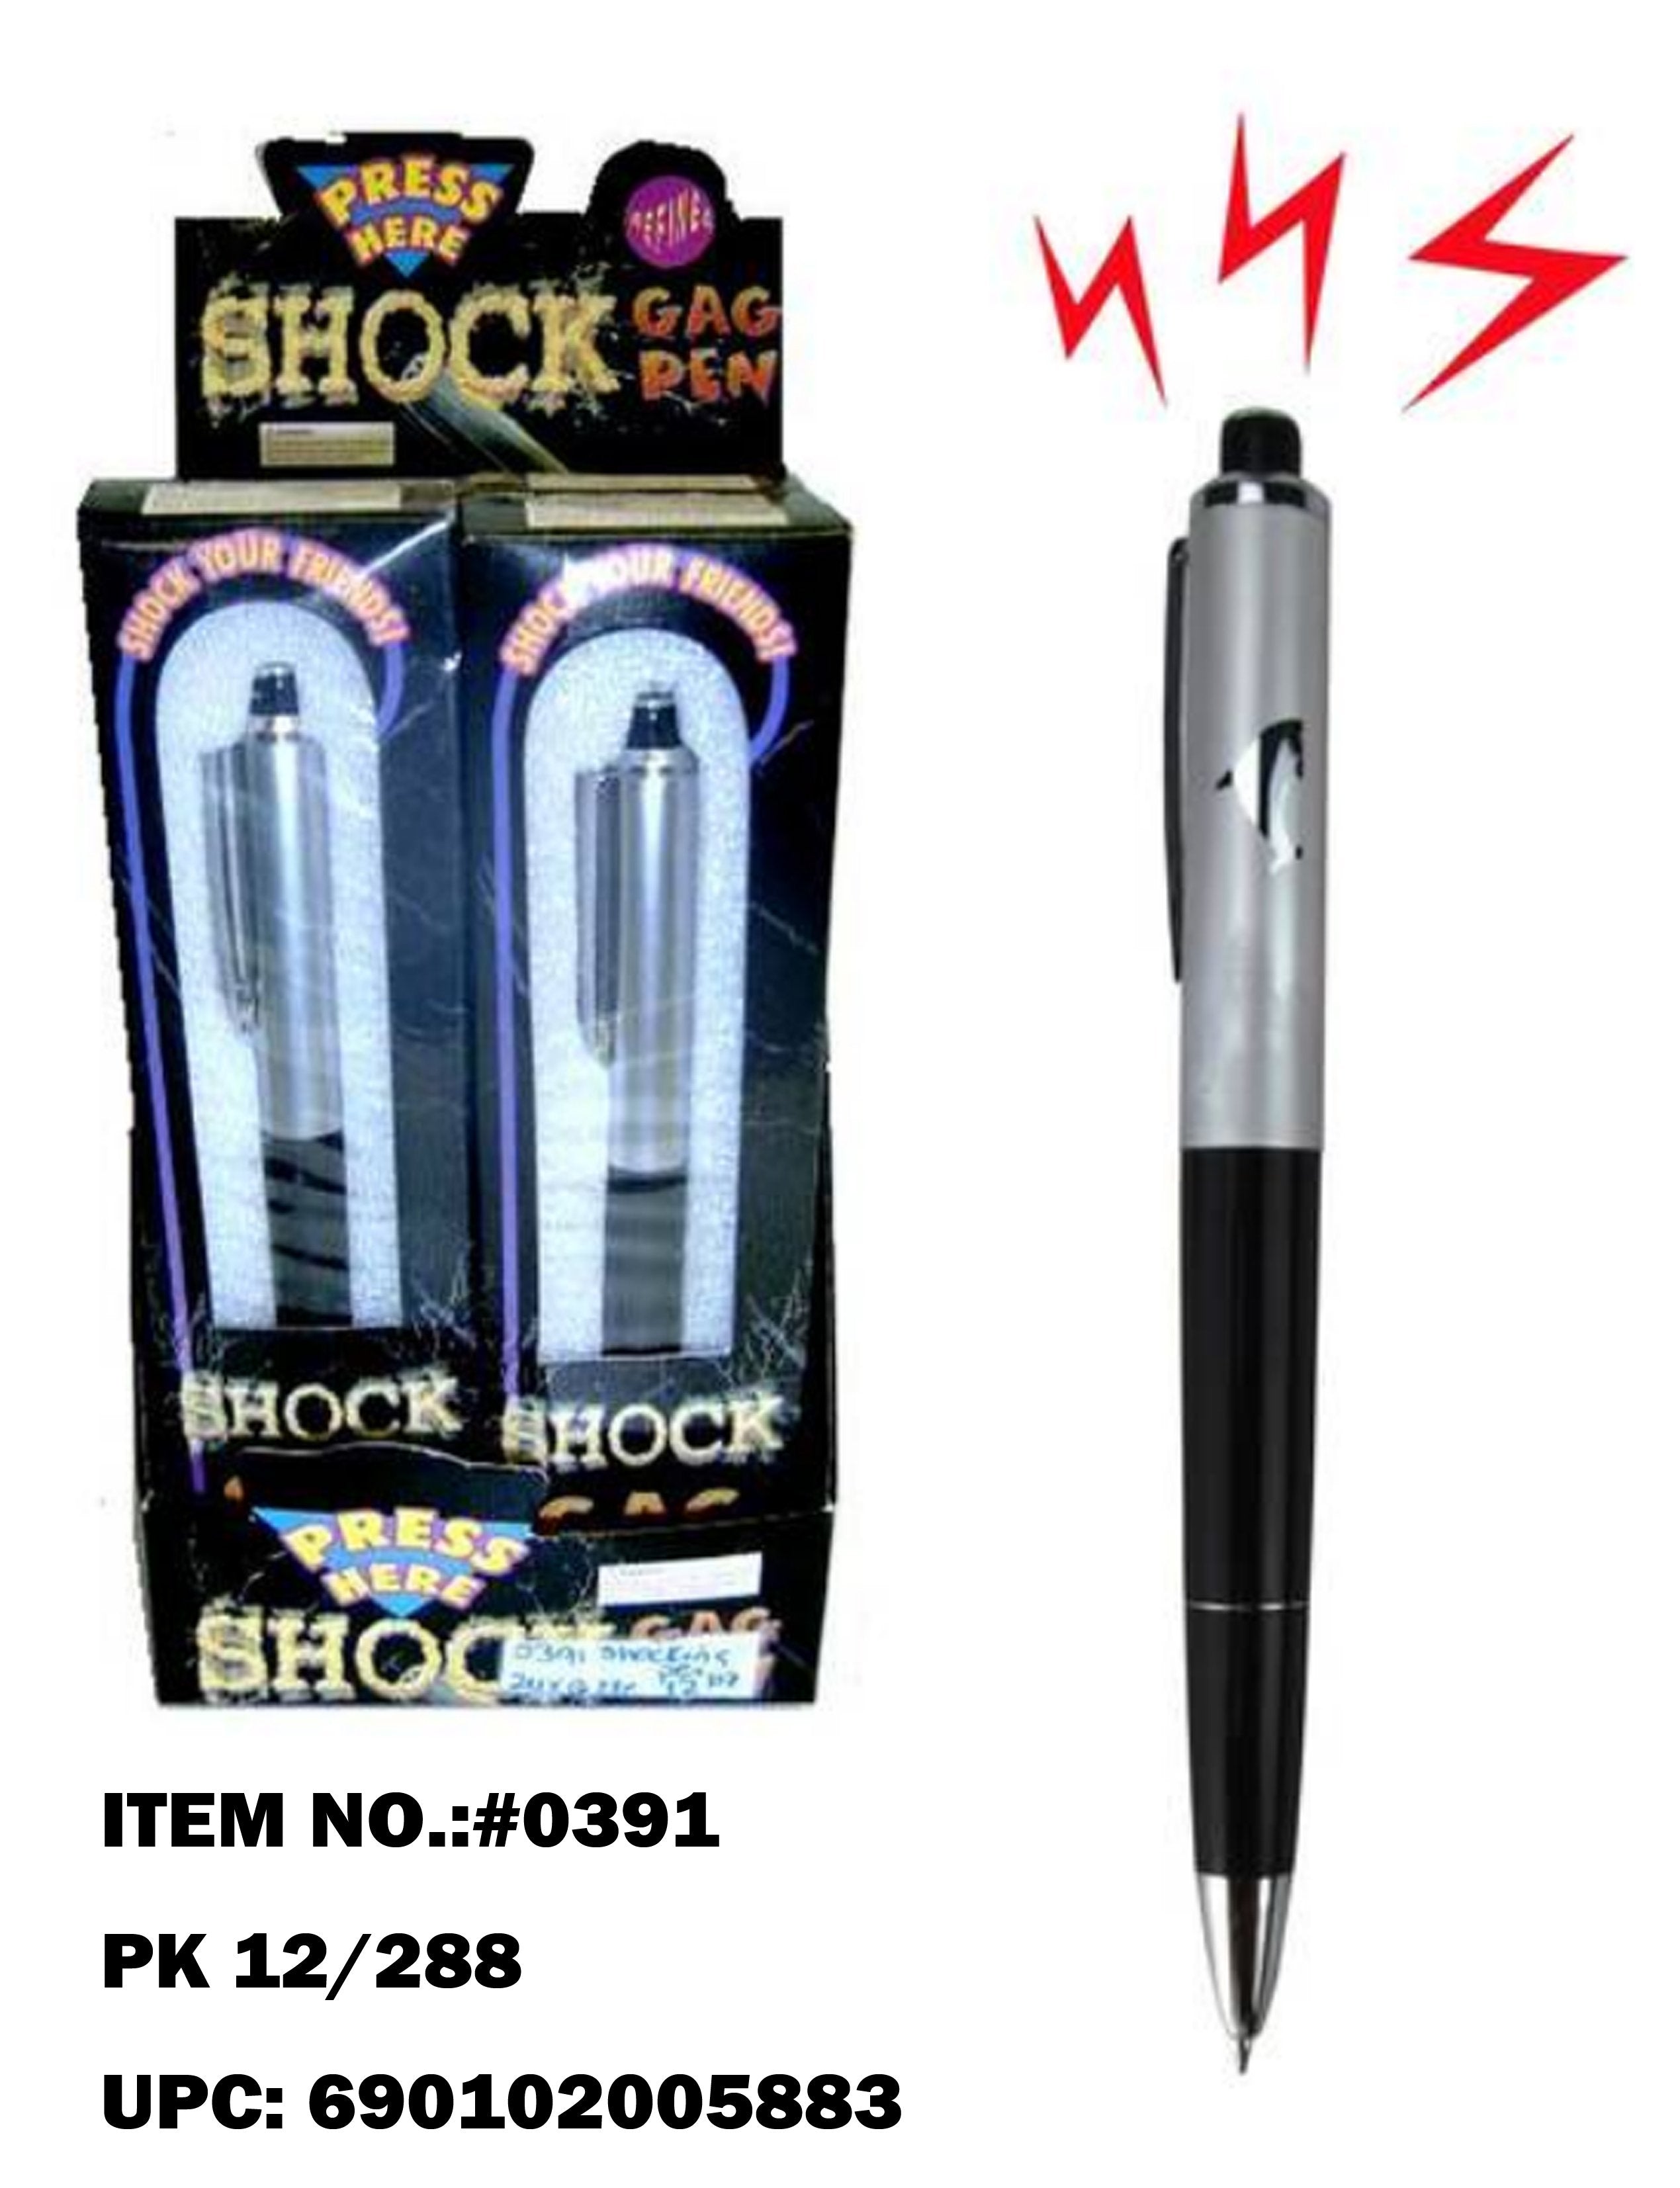 Prank Shock Pens - Electric Shocking Pen and Marker Set of 2